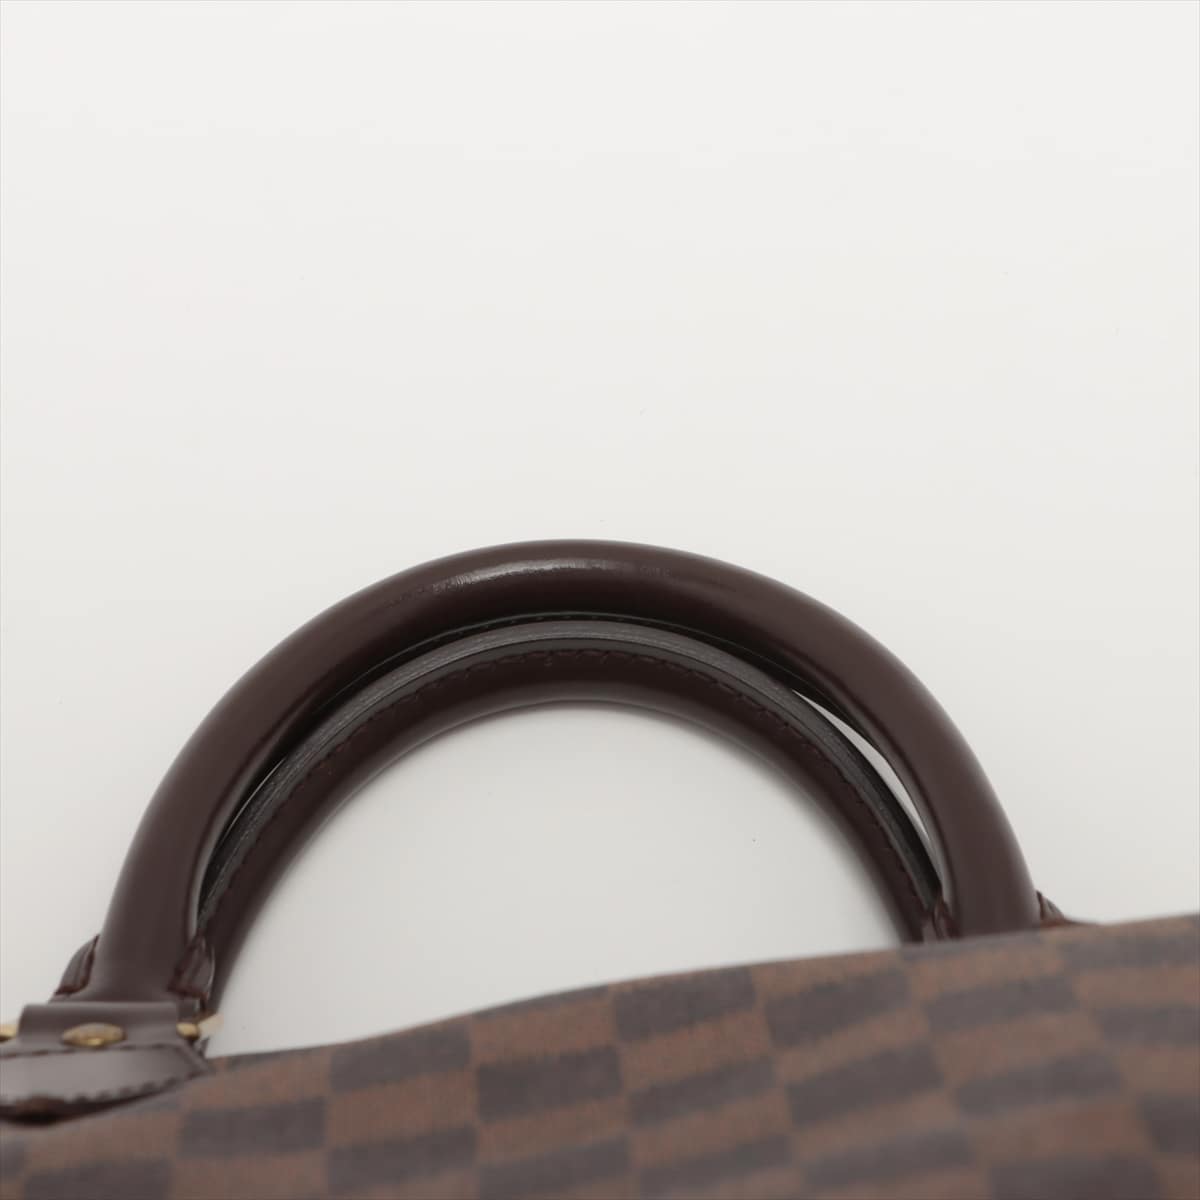 Louis Vuitton Damier Ebene Canvas Speedy Bags 30 N41531  Louis vuitton  handbags outlet, Louis vuitton handbags, Fashion